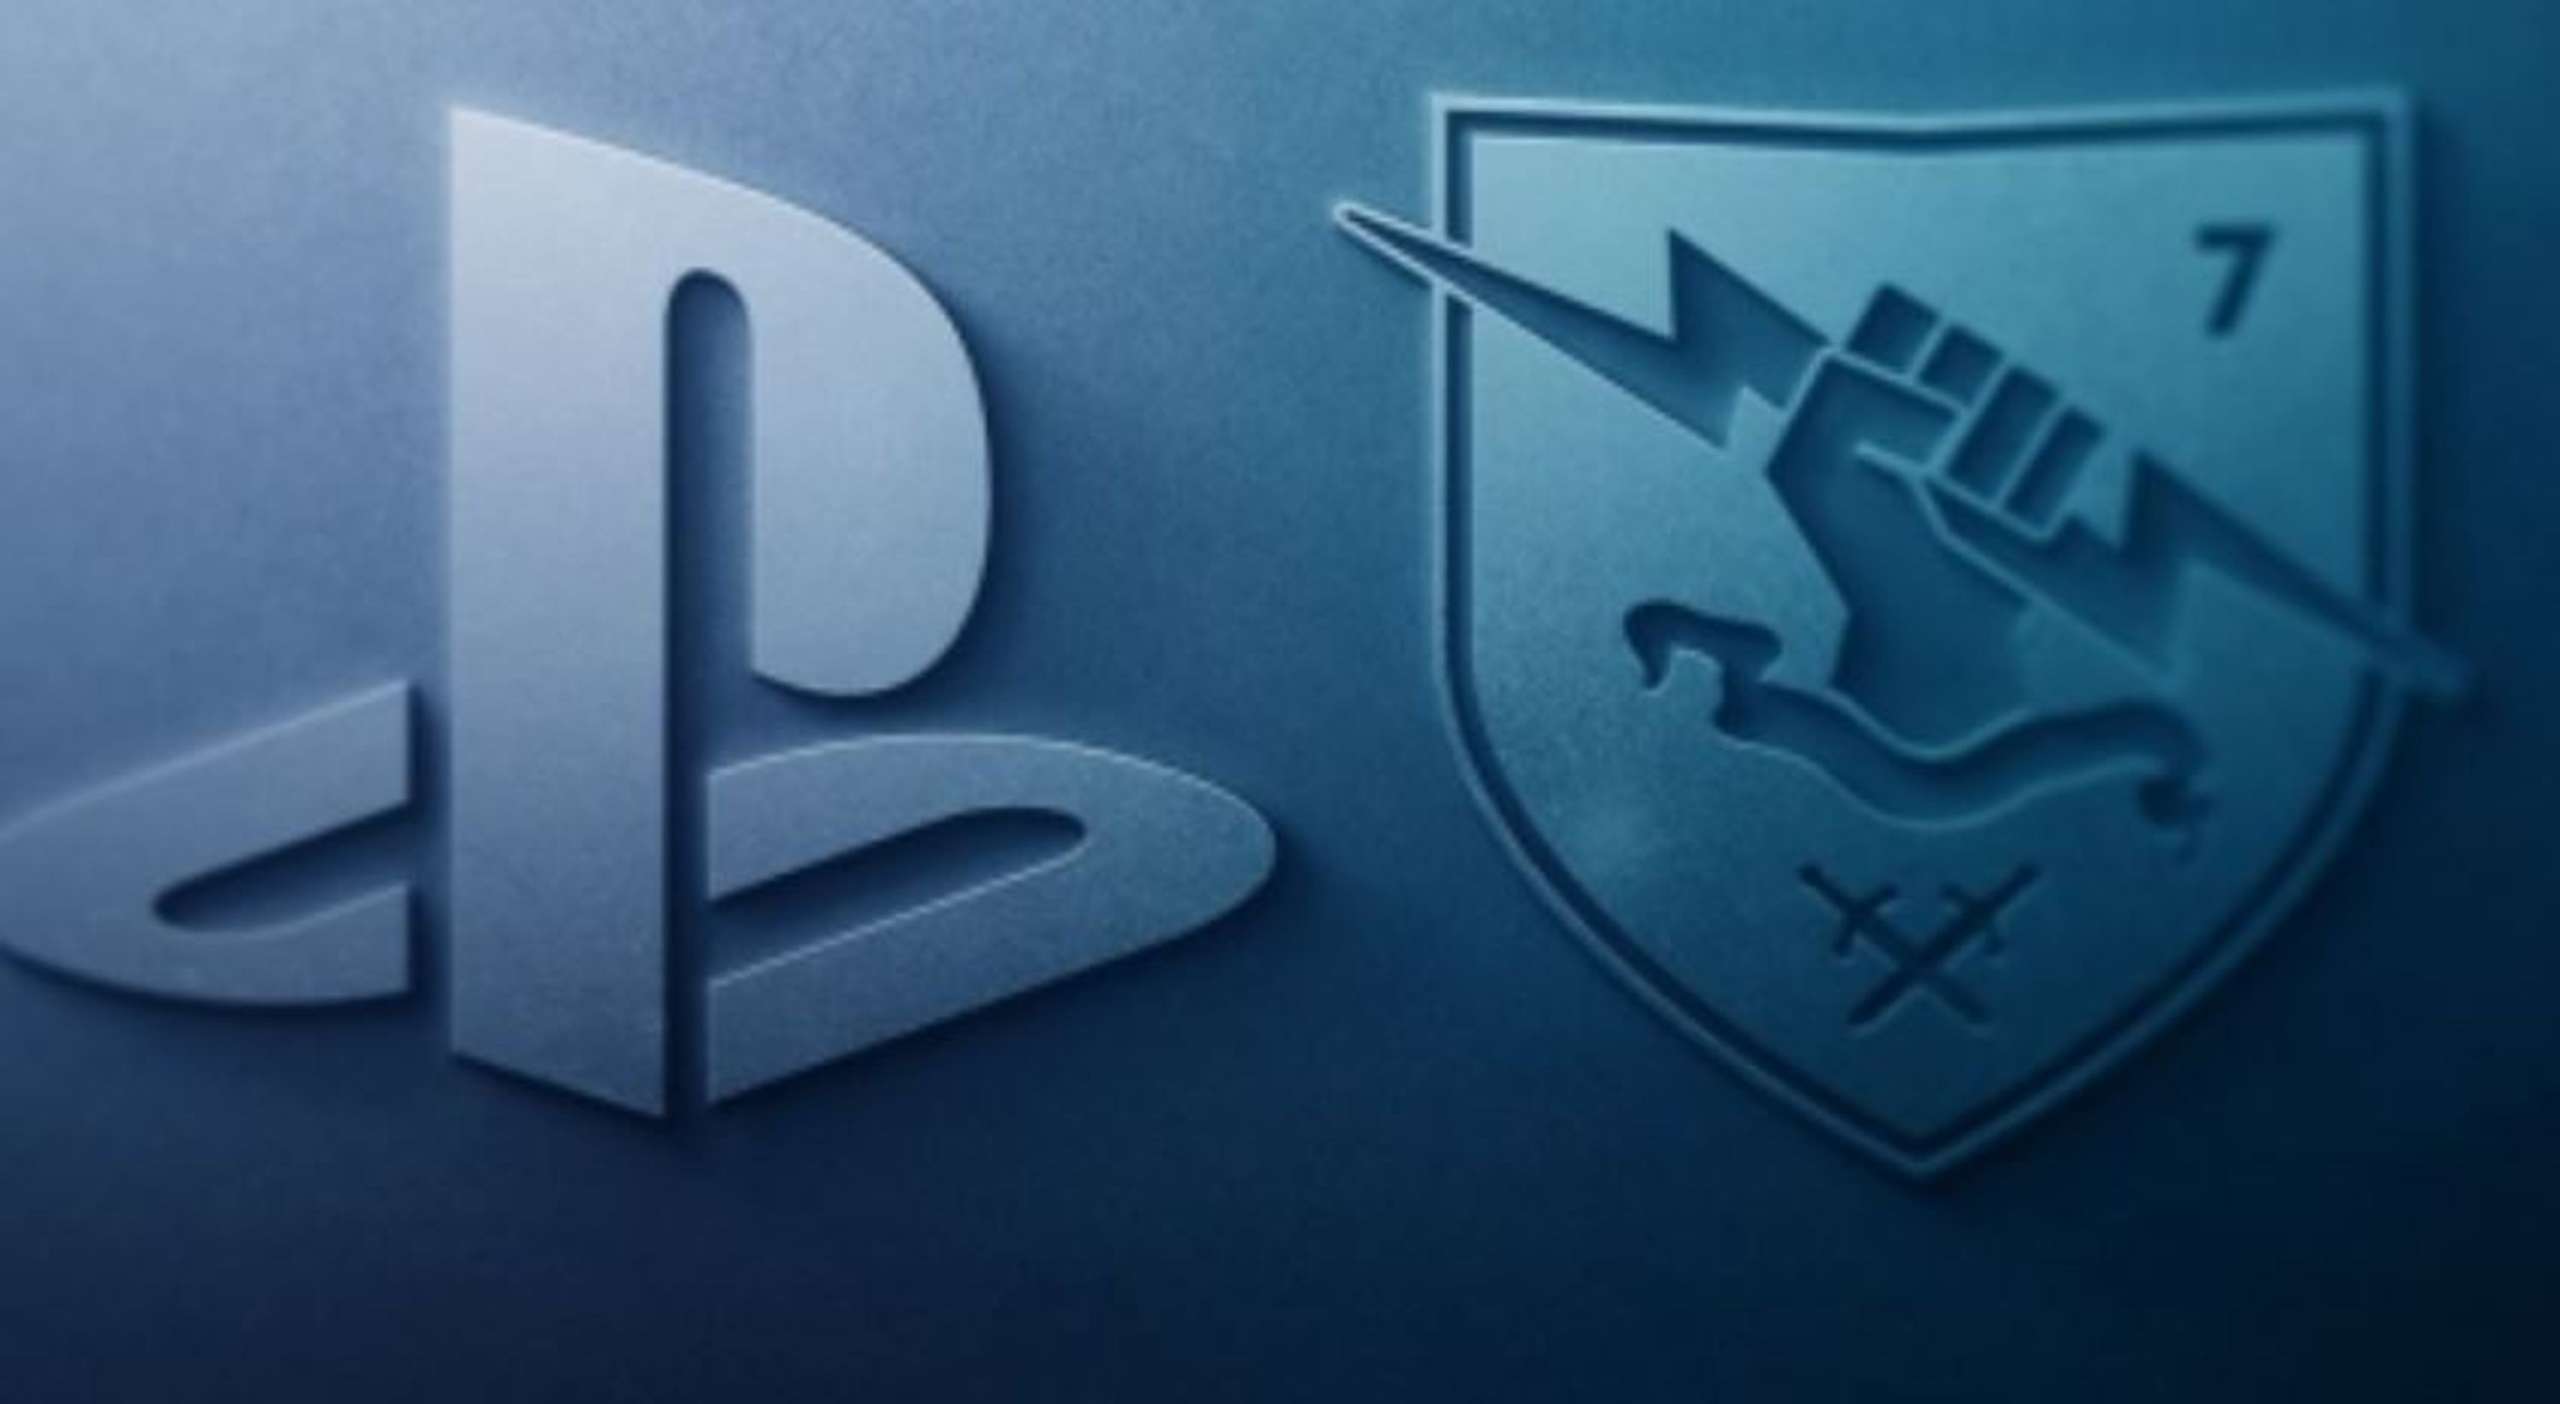 Sony Completes A $3.6 Billion Acquisition Of Bungie Studiosdollars